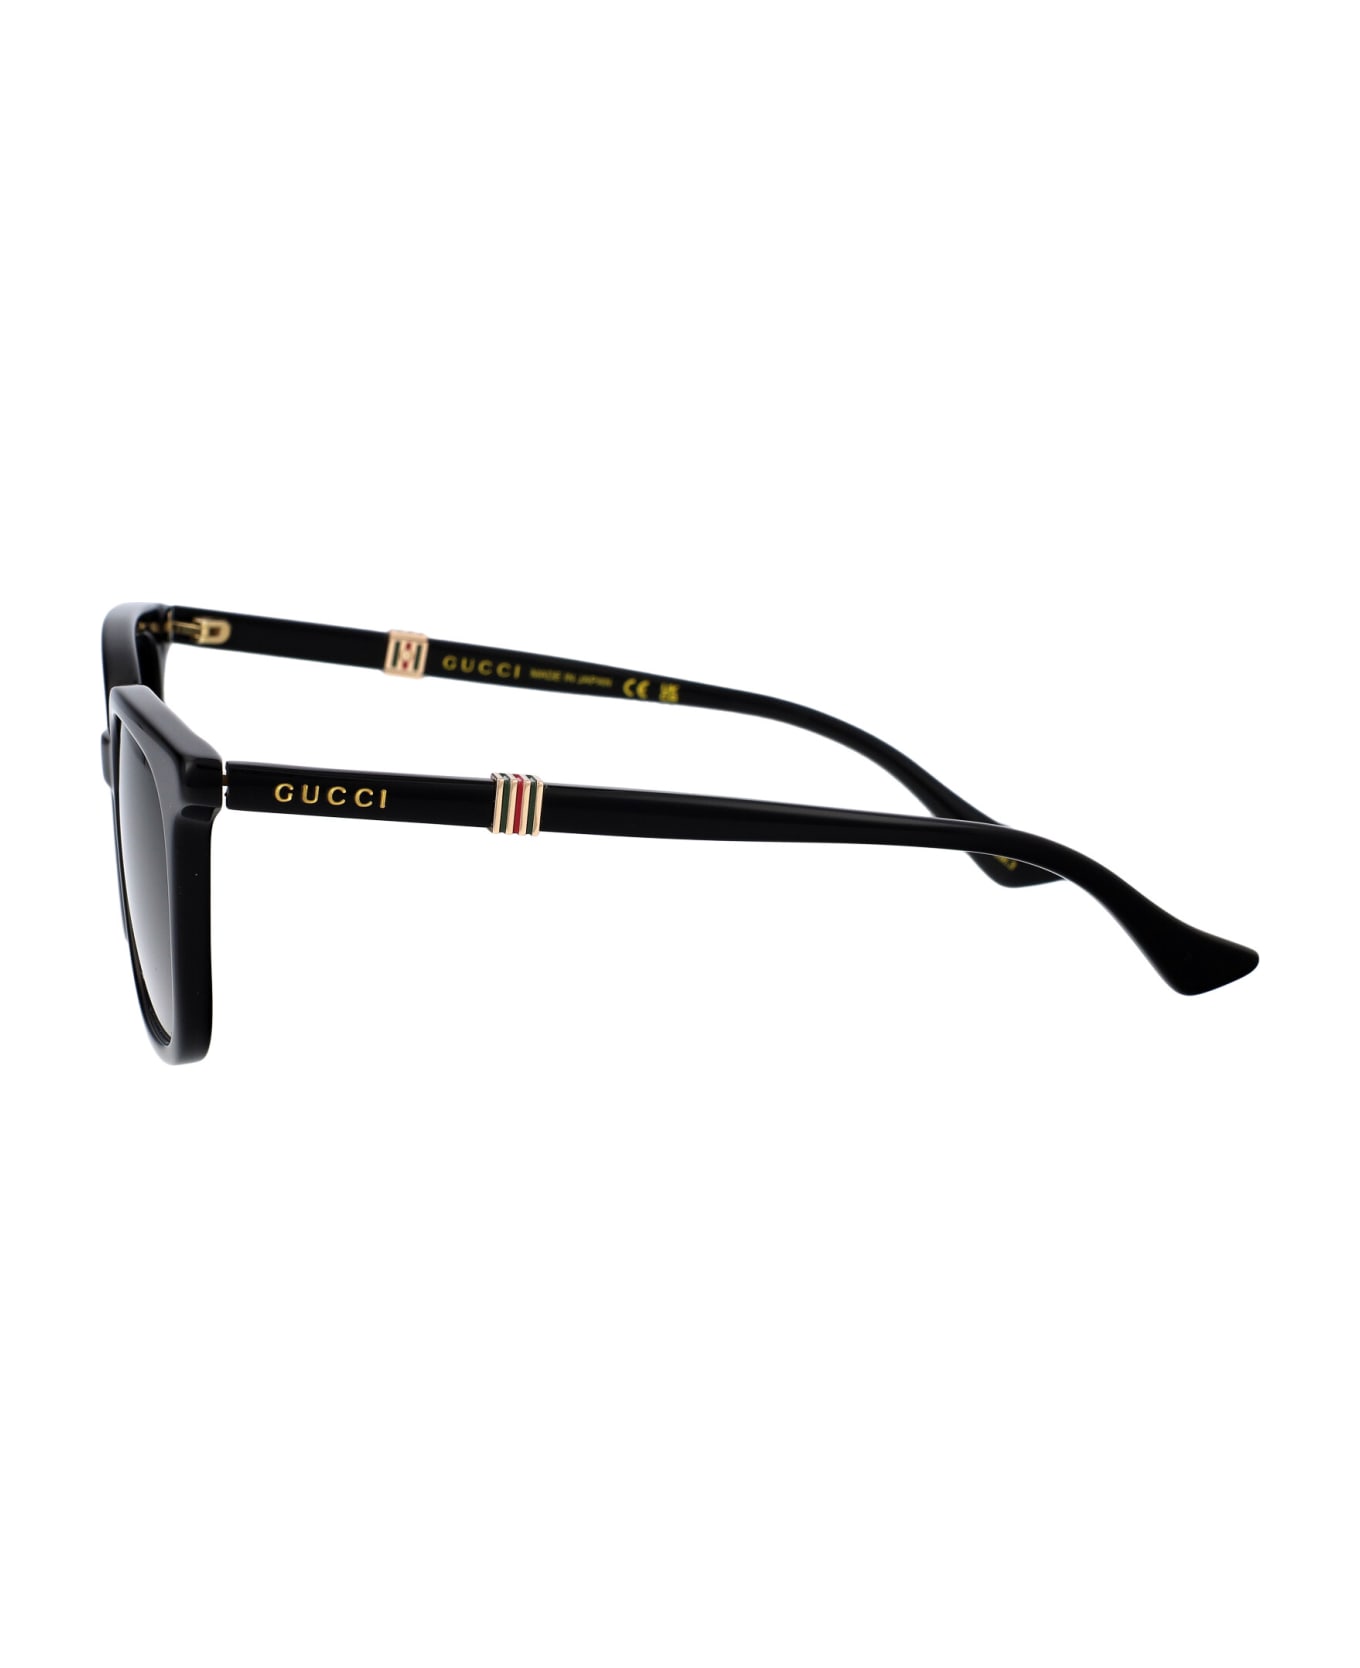 Gucci Eyewear Gg1493s Sunglasses - 001 BLACK BLACK GREY